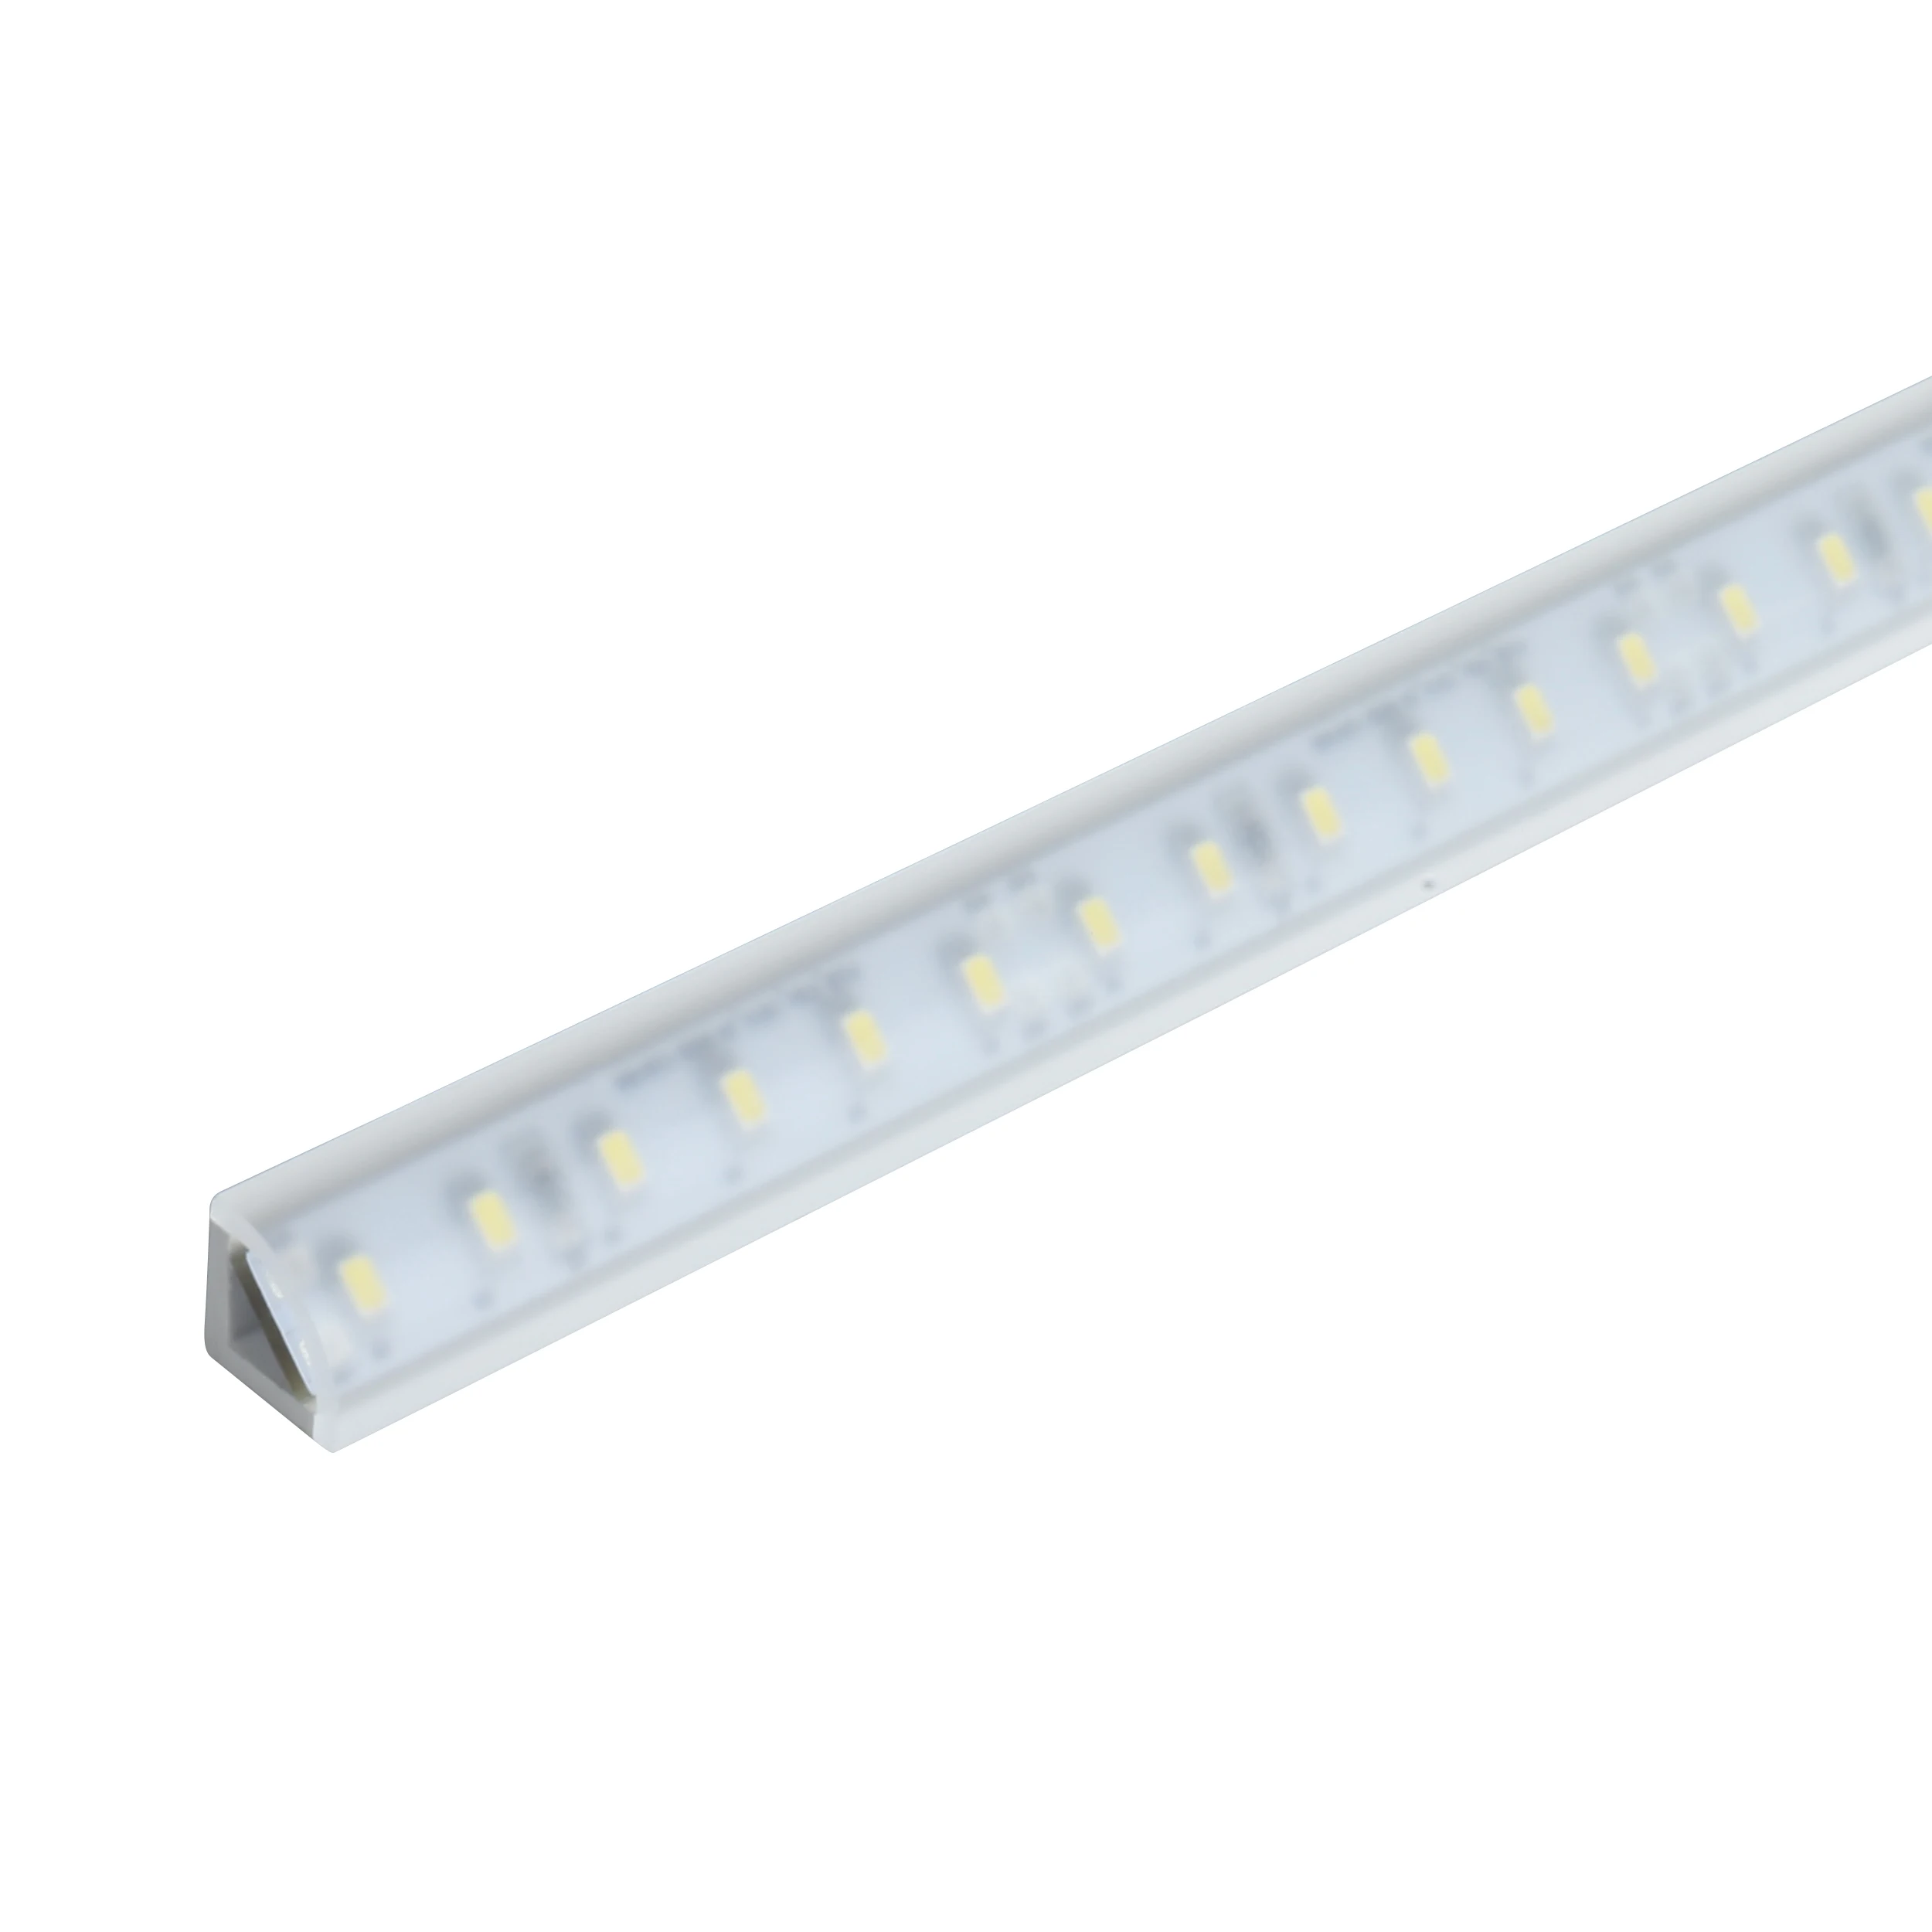 PA1010  LED strip corner lights shell LED PC Profiles led strip light PMMA one-piece estrued profile